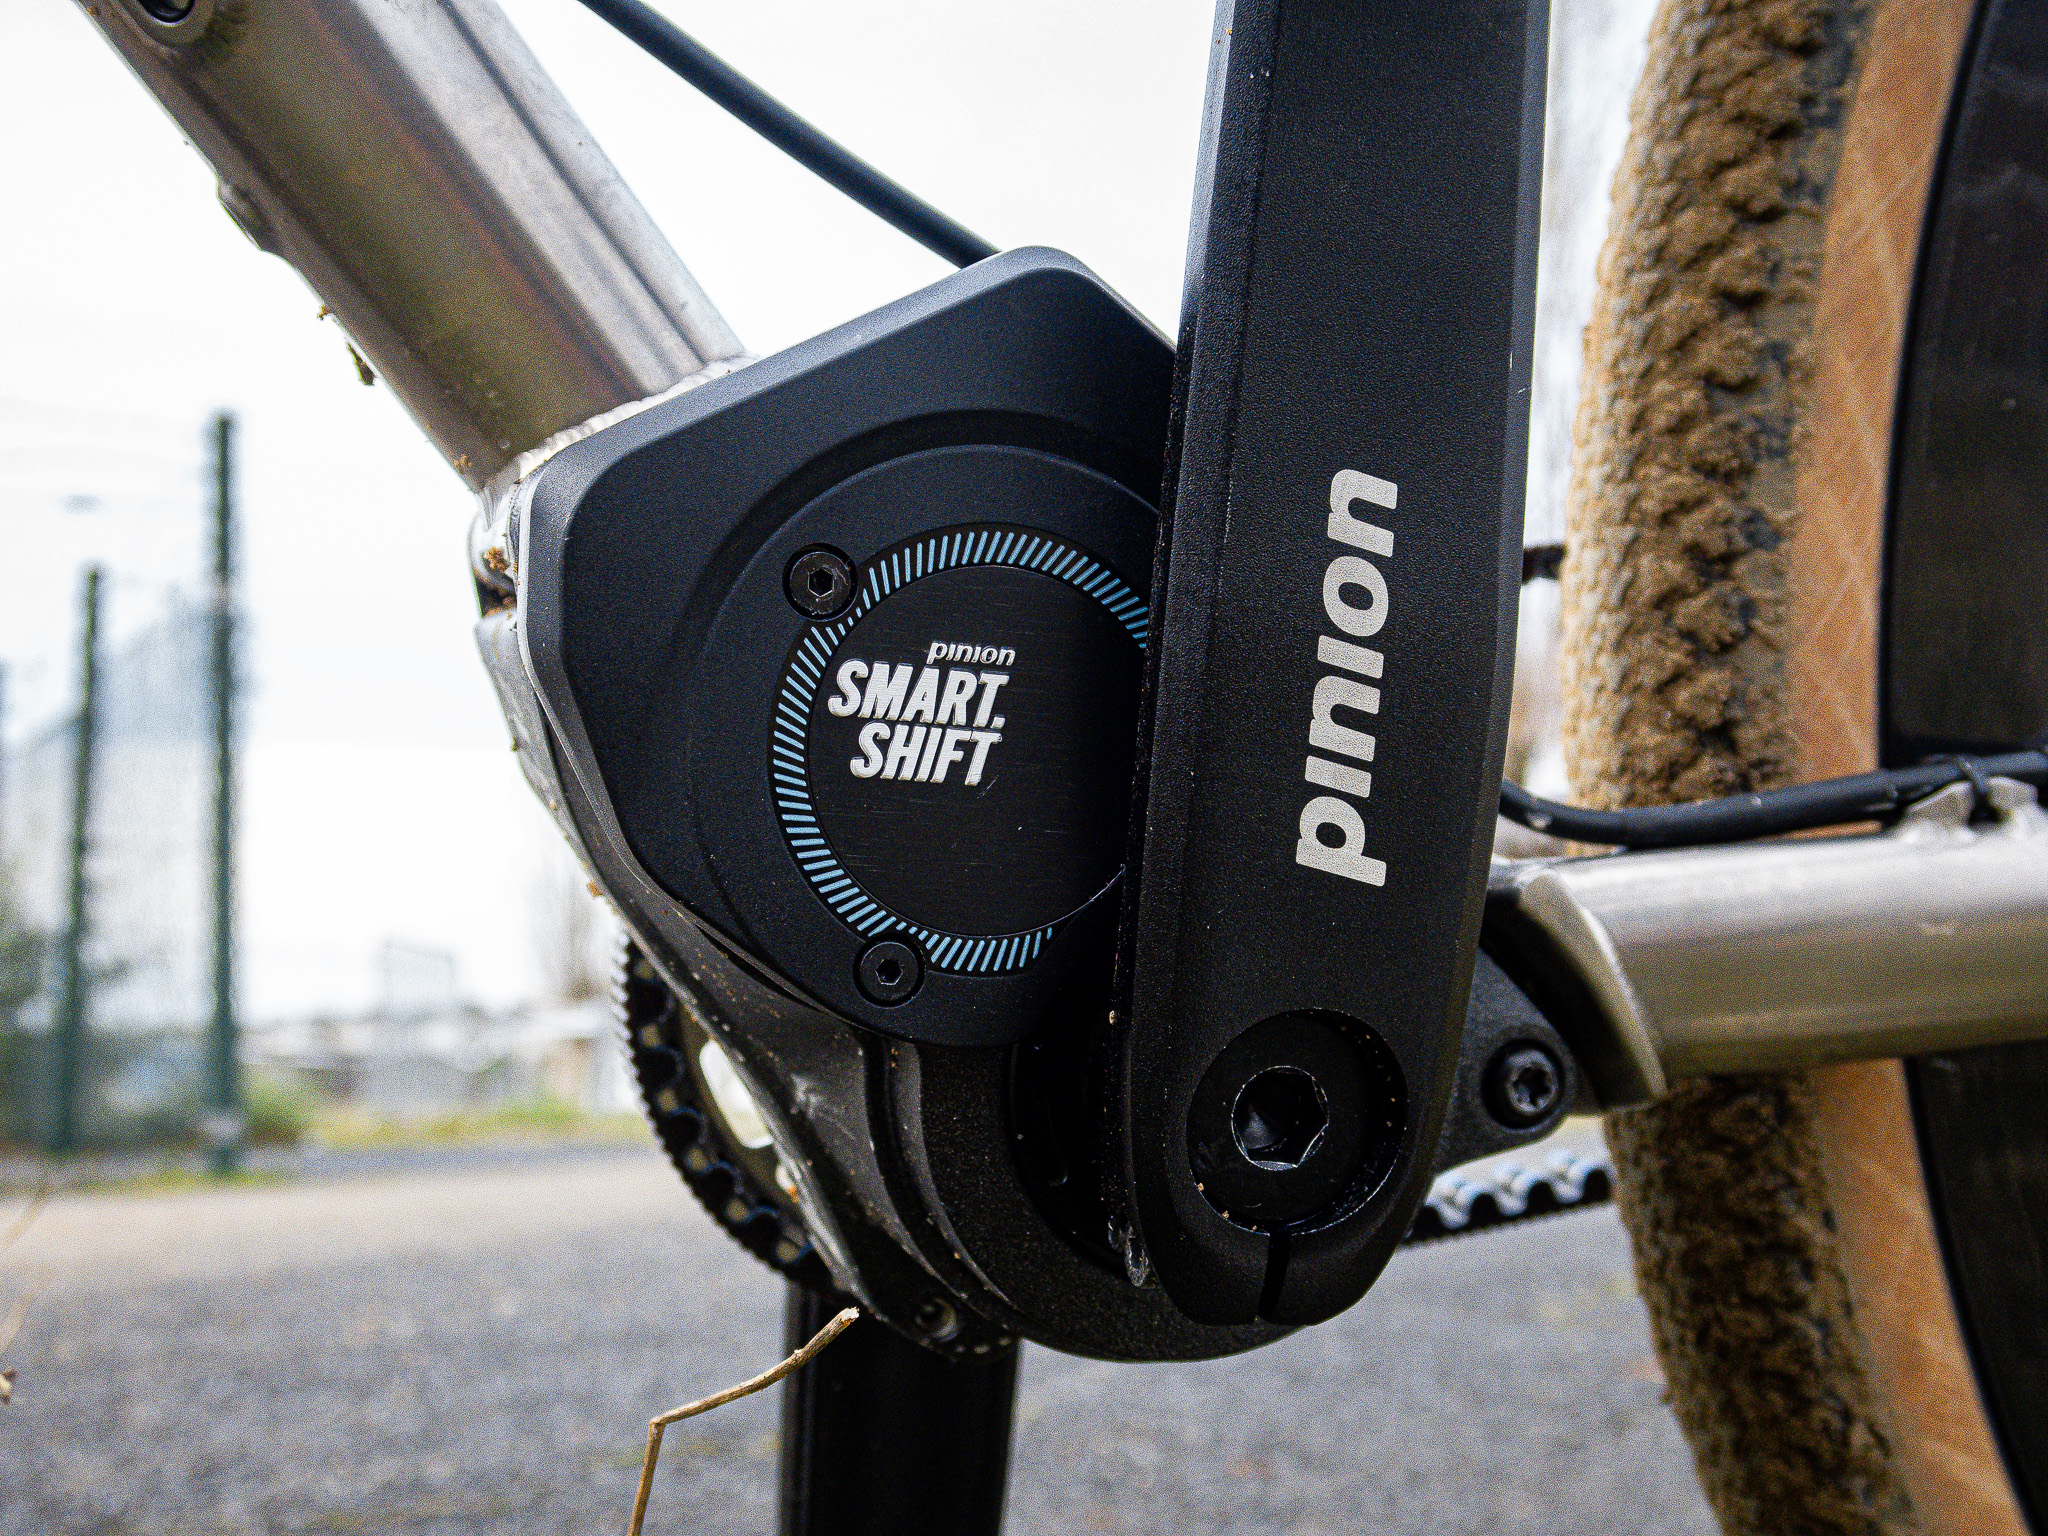 Pinion smart shift internal bicycle gearing system